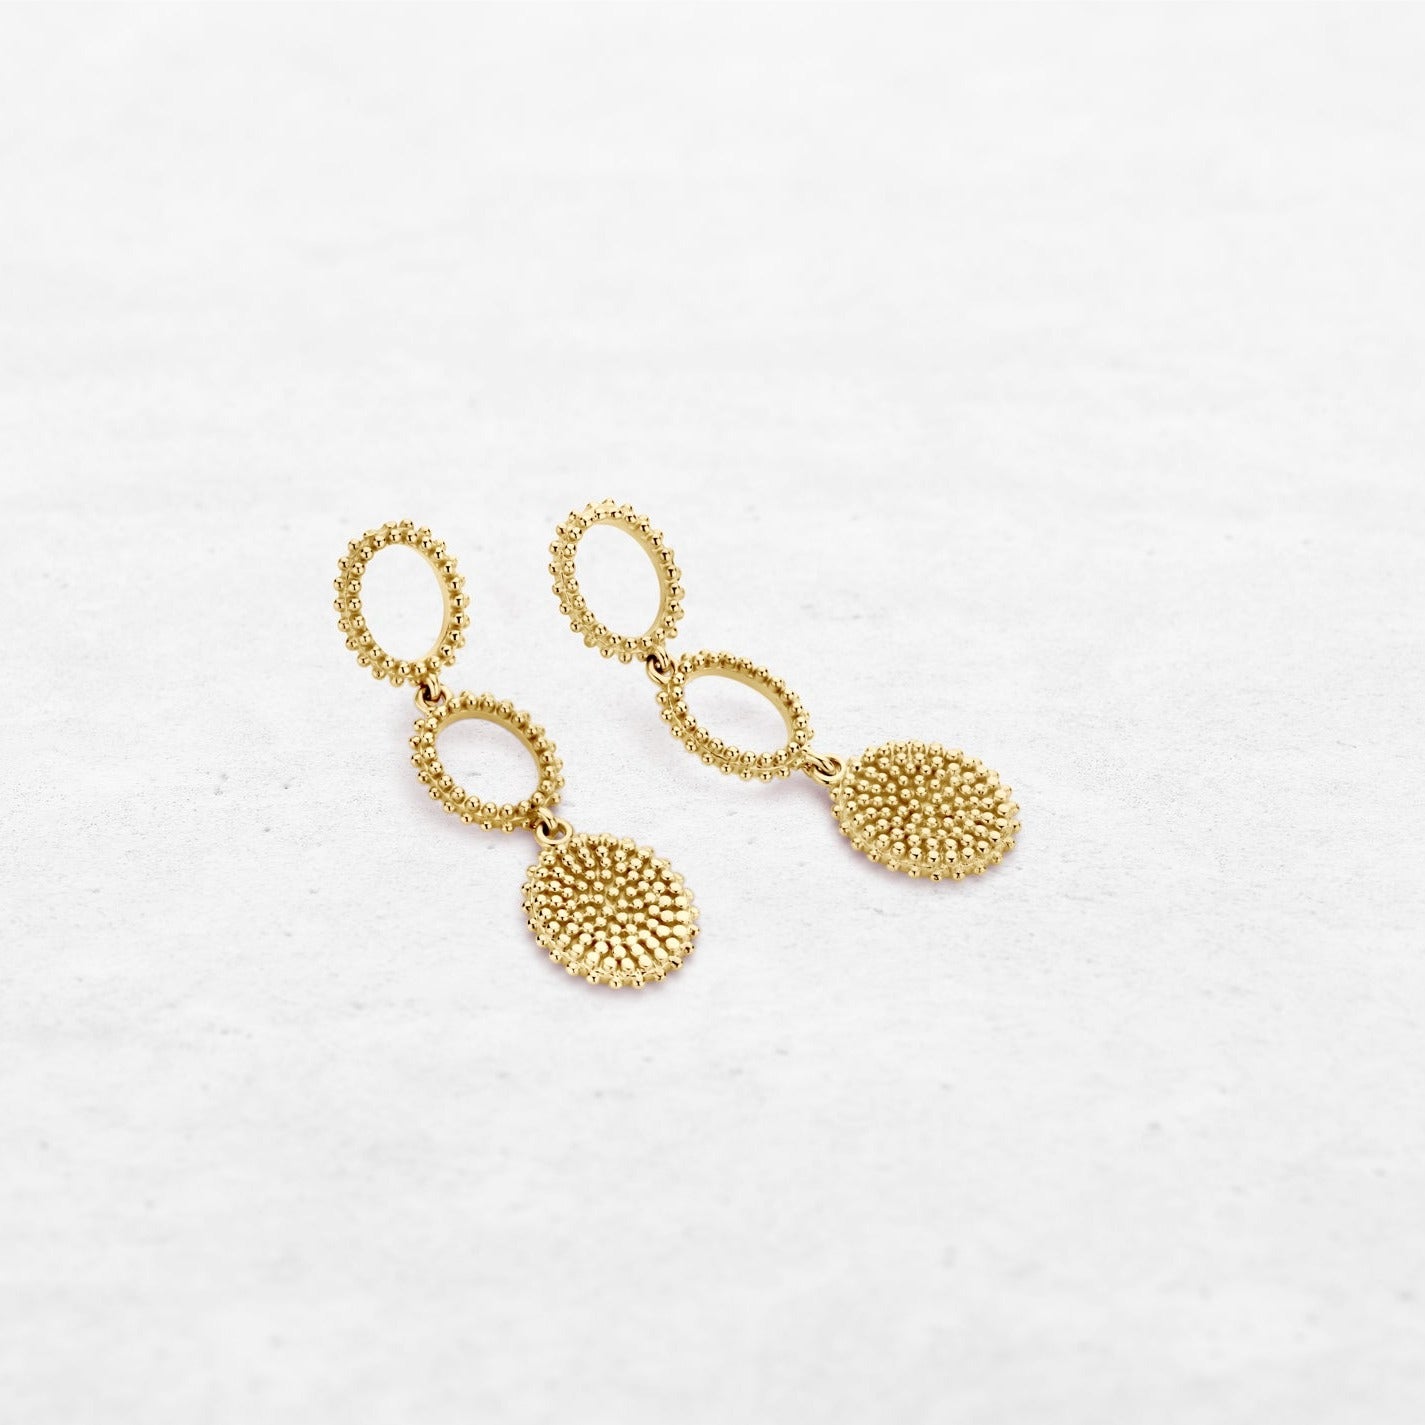 Circular earrings in yellow gold made by O! Jewelry